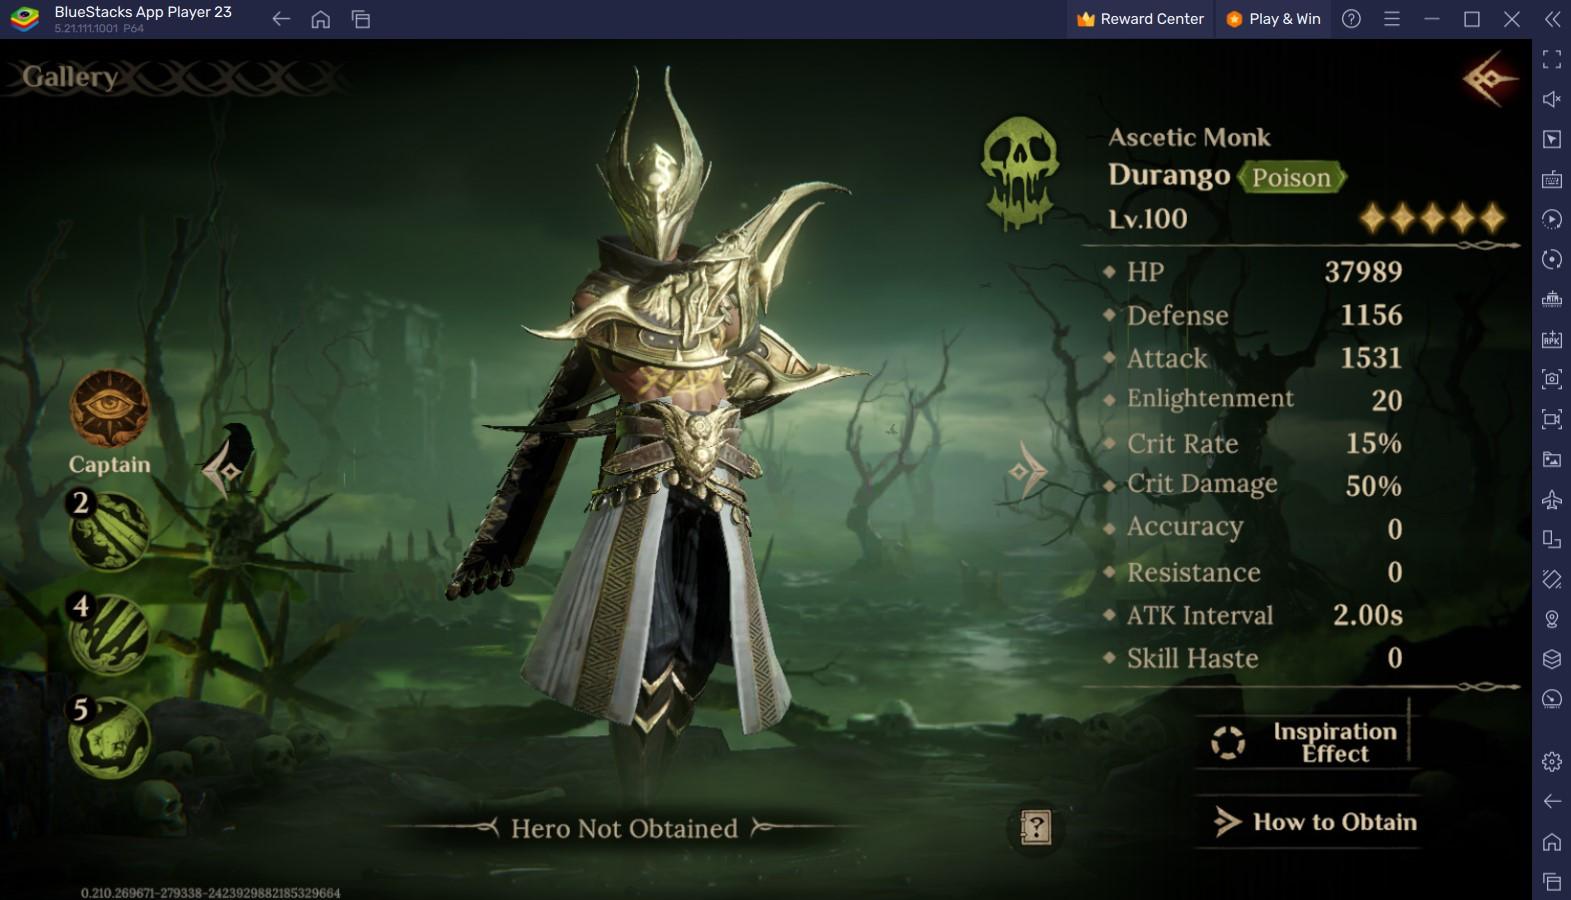 Dragonheir: Silent Gods – Tier List for the Best Heroes